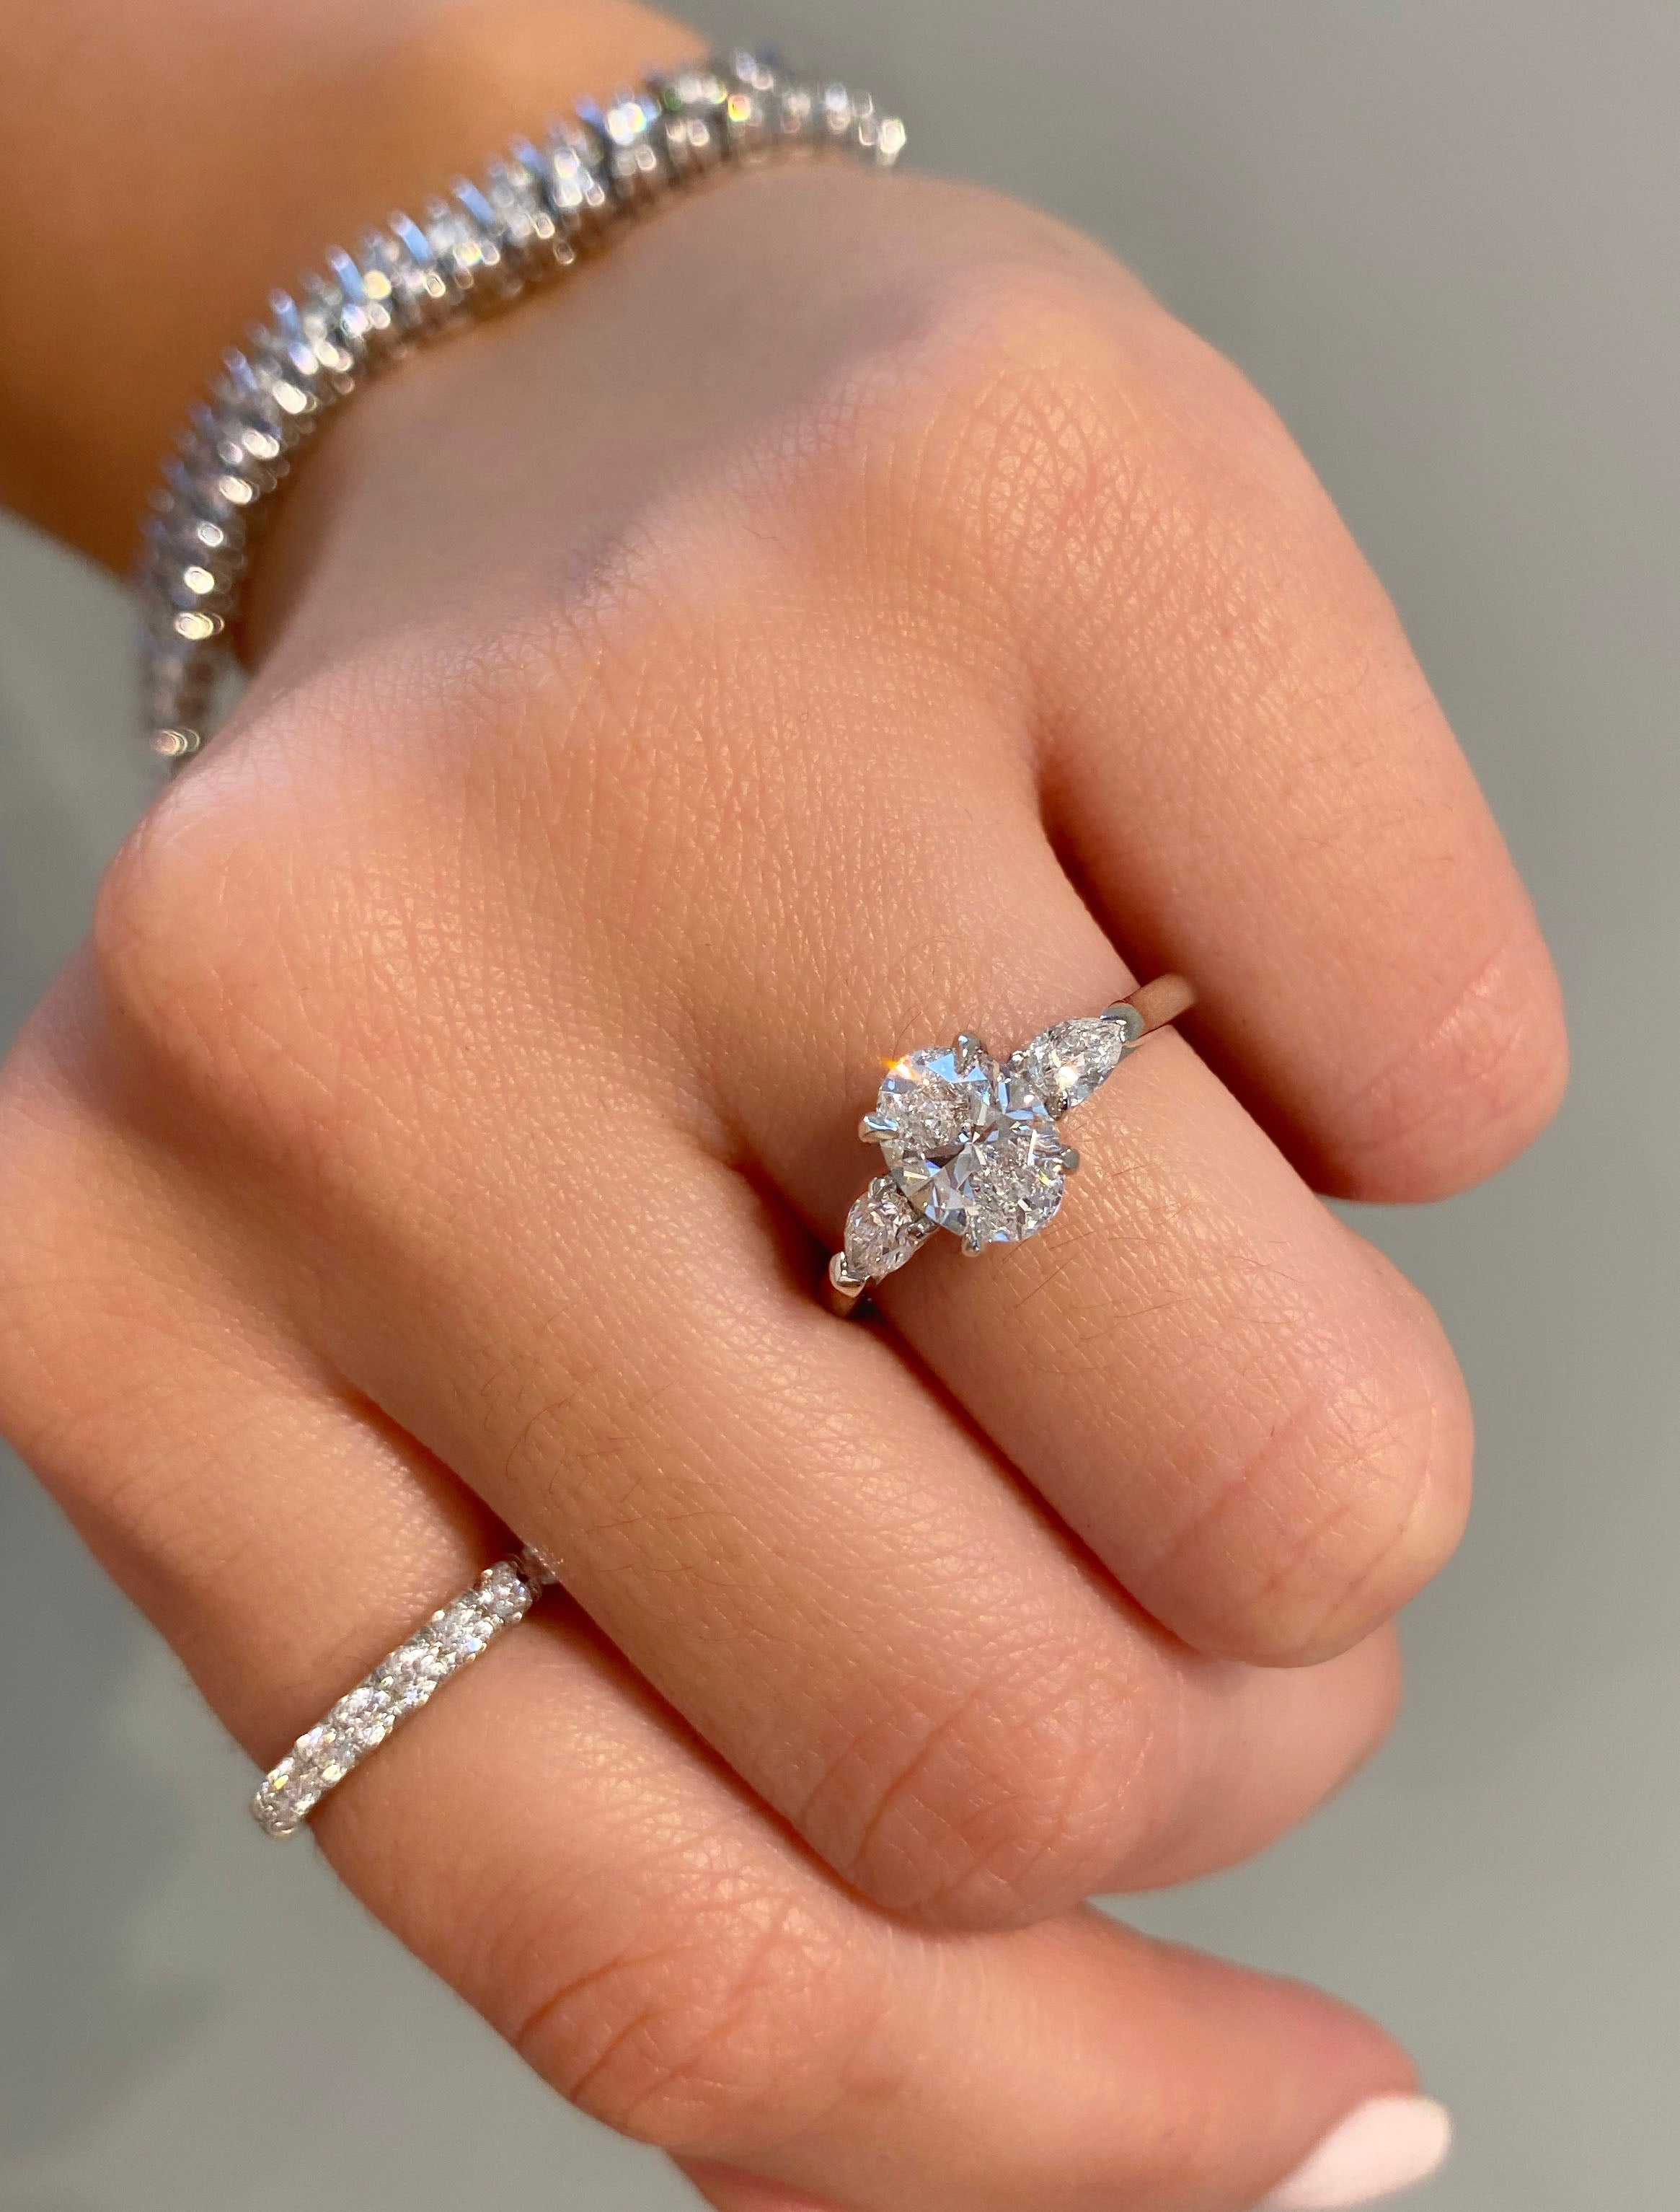 Empreinte Alliance platinum ring with a single diamond